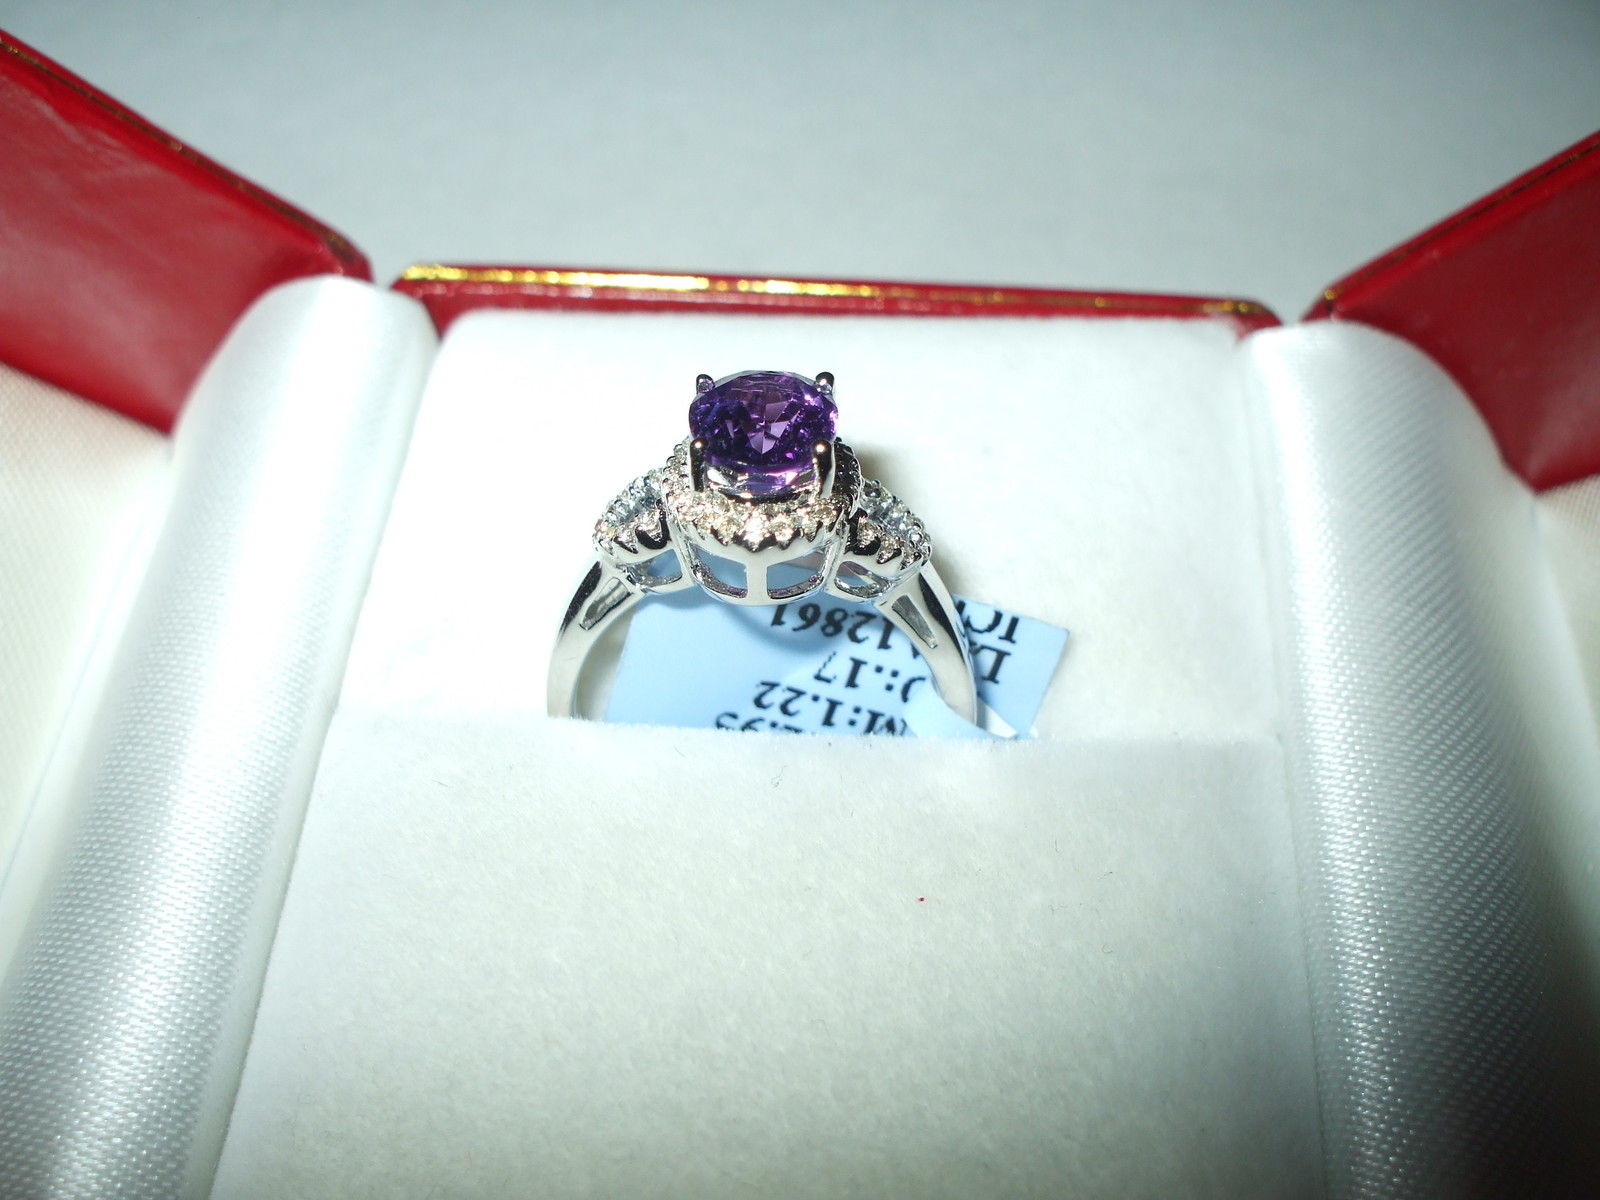 Genuine 1.22 ct Amethyst & Diamond Ring 14K white gold $1300 NWT